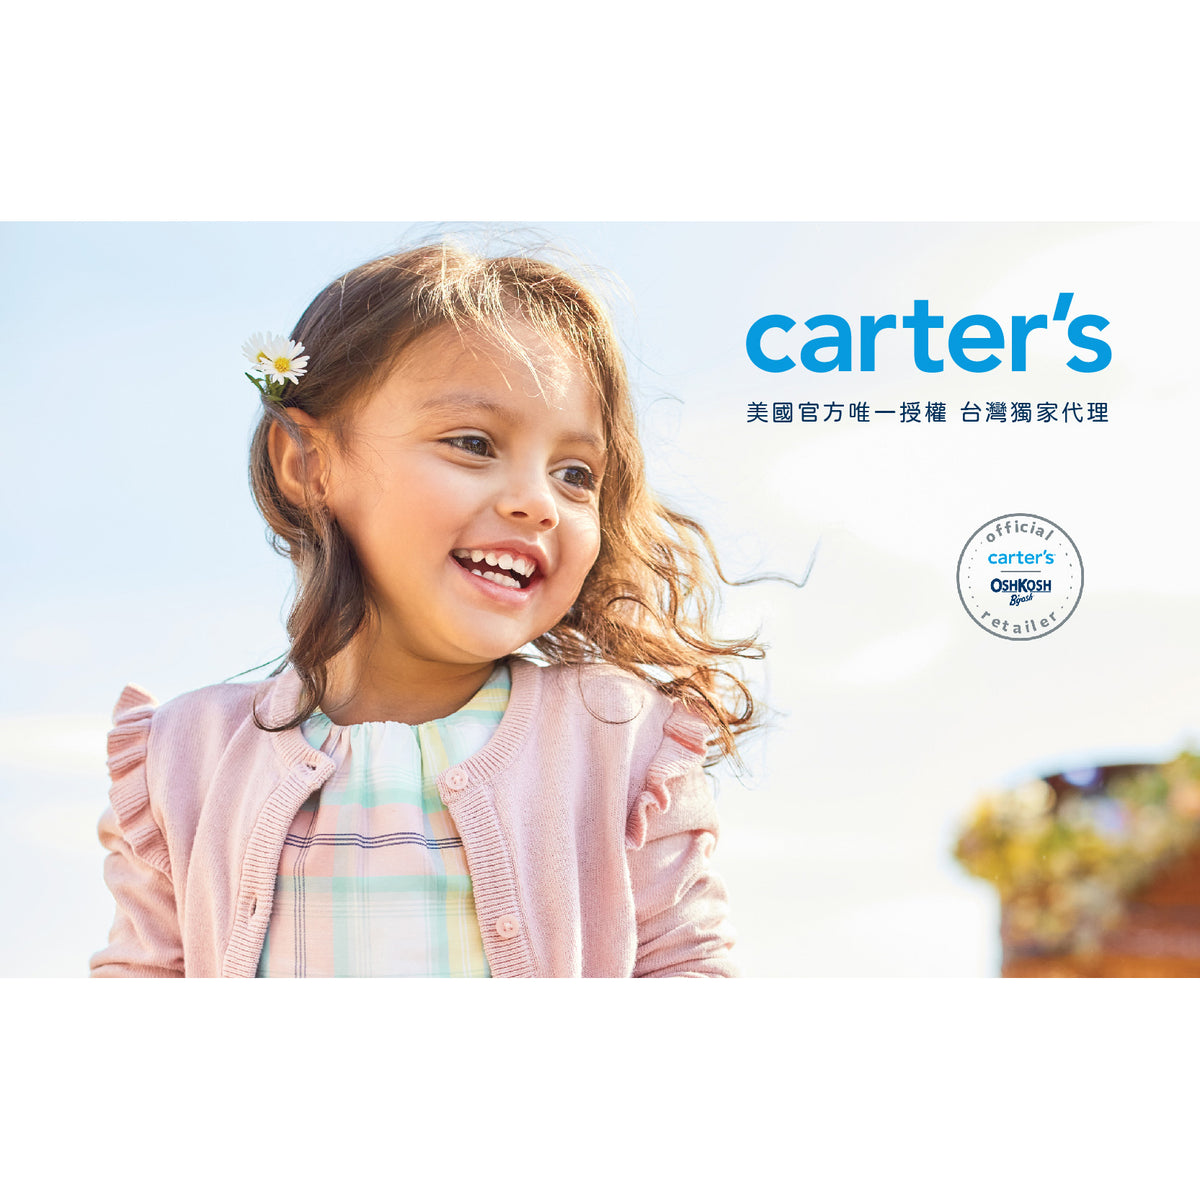 Carter's 紫色薰衣草無袖連身裝(2T-5T)